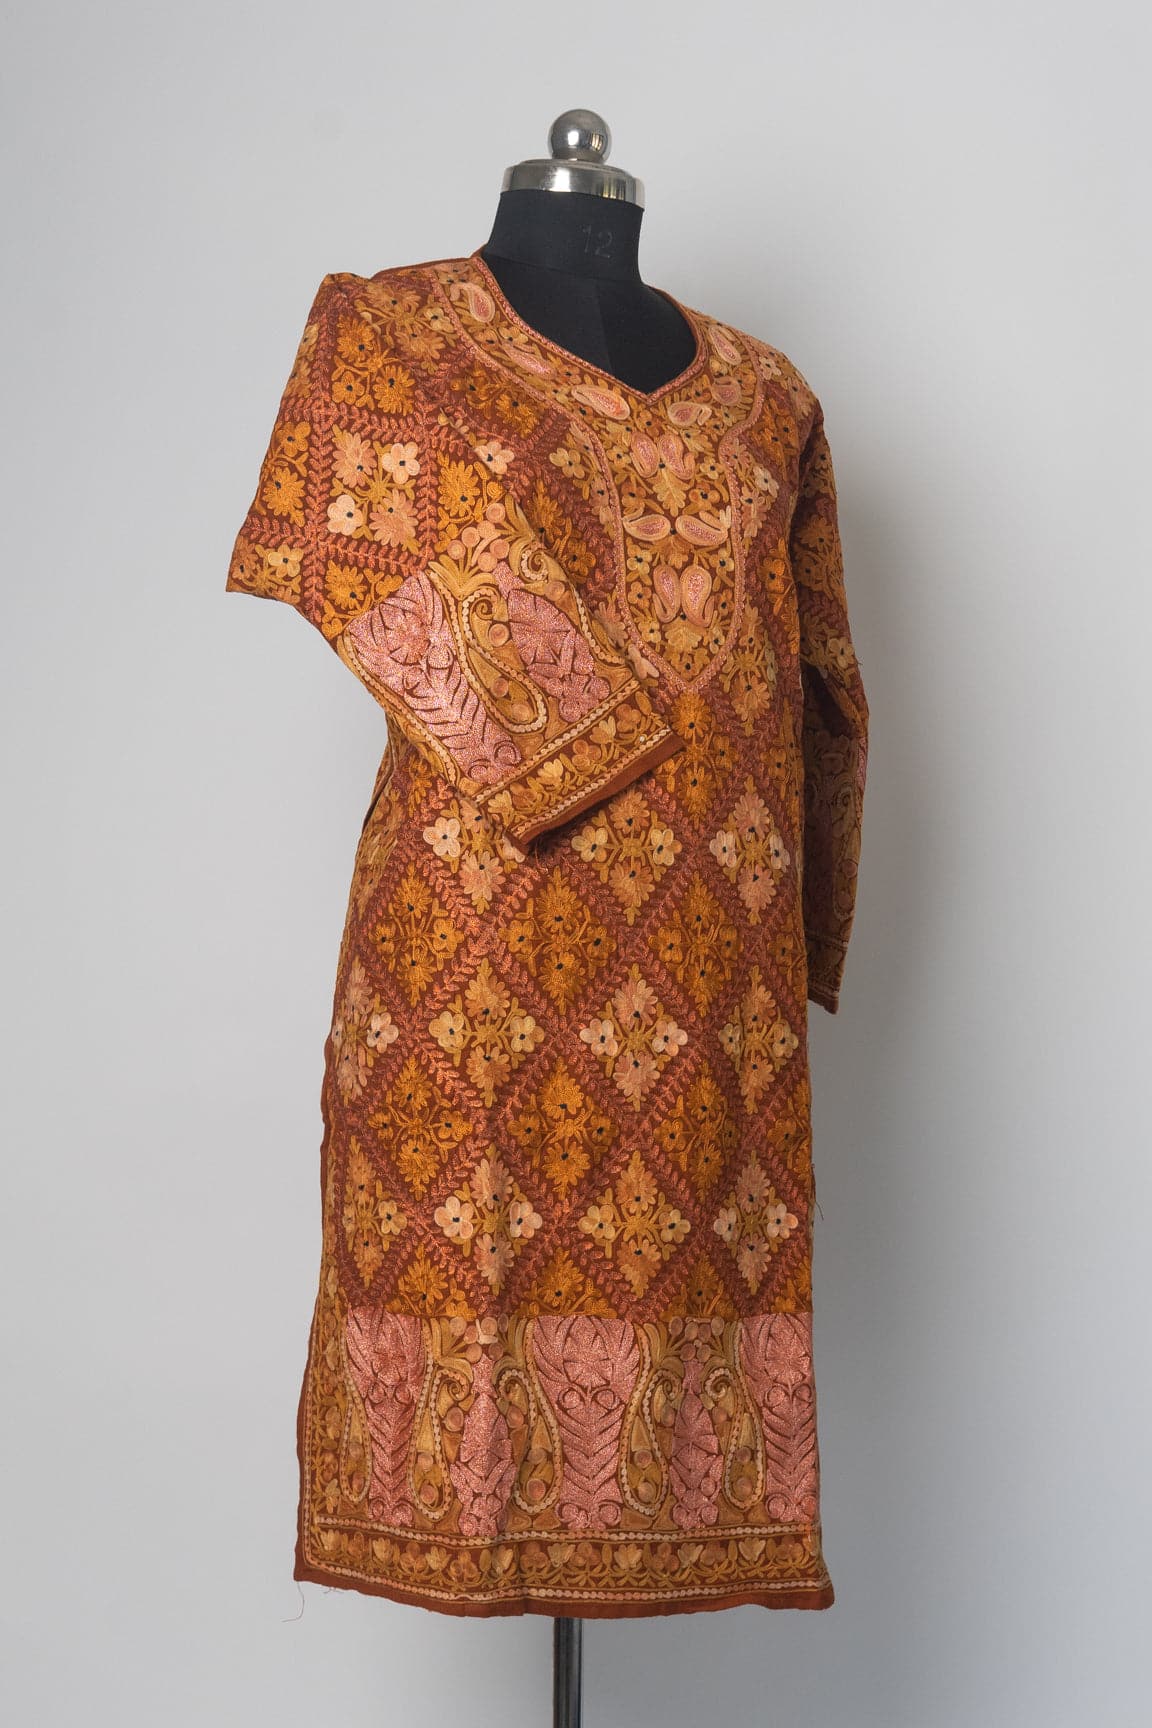 Autumn Radiance Kurti Style Long Dress with Aari & Zari Embroidery